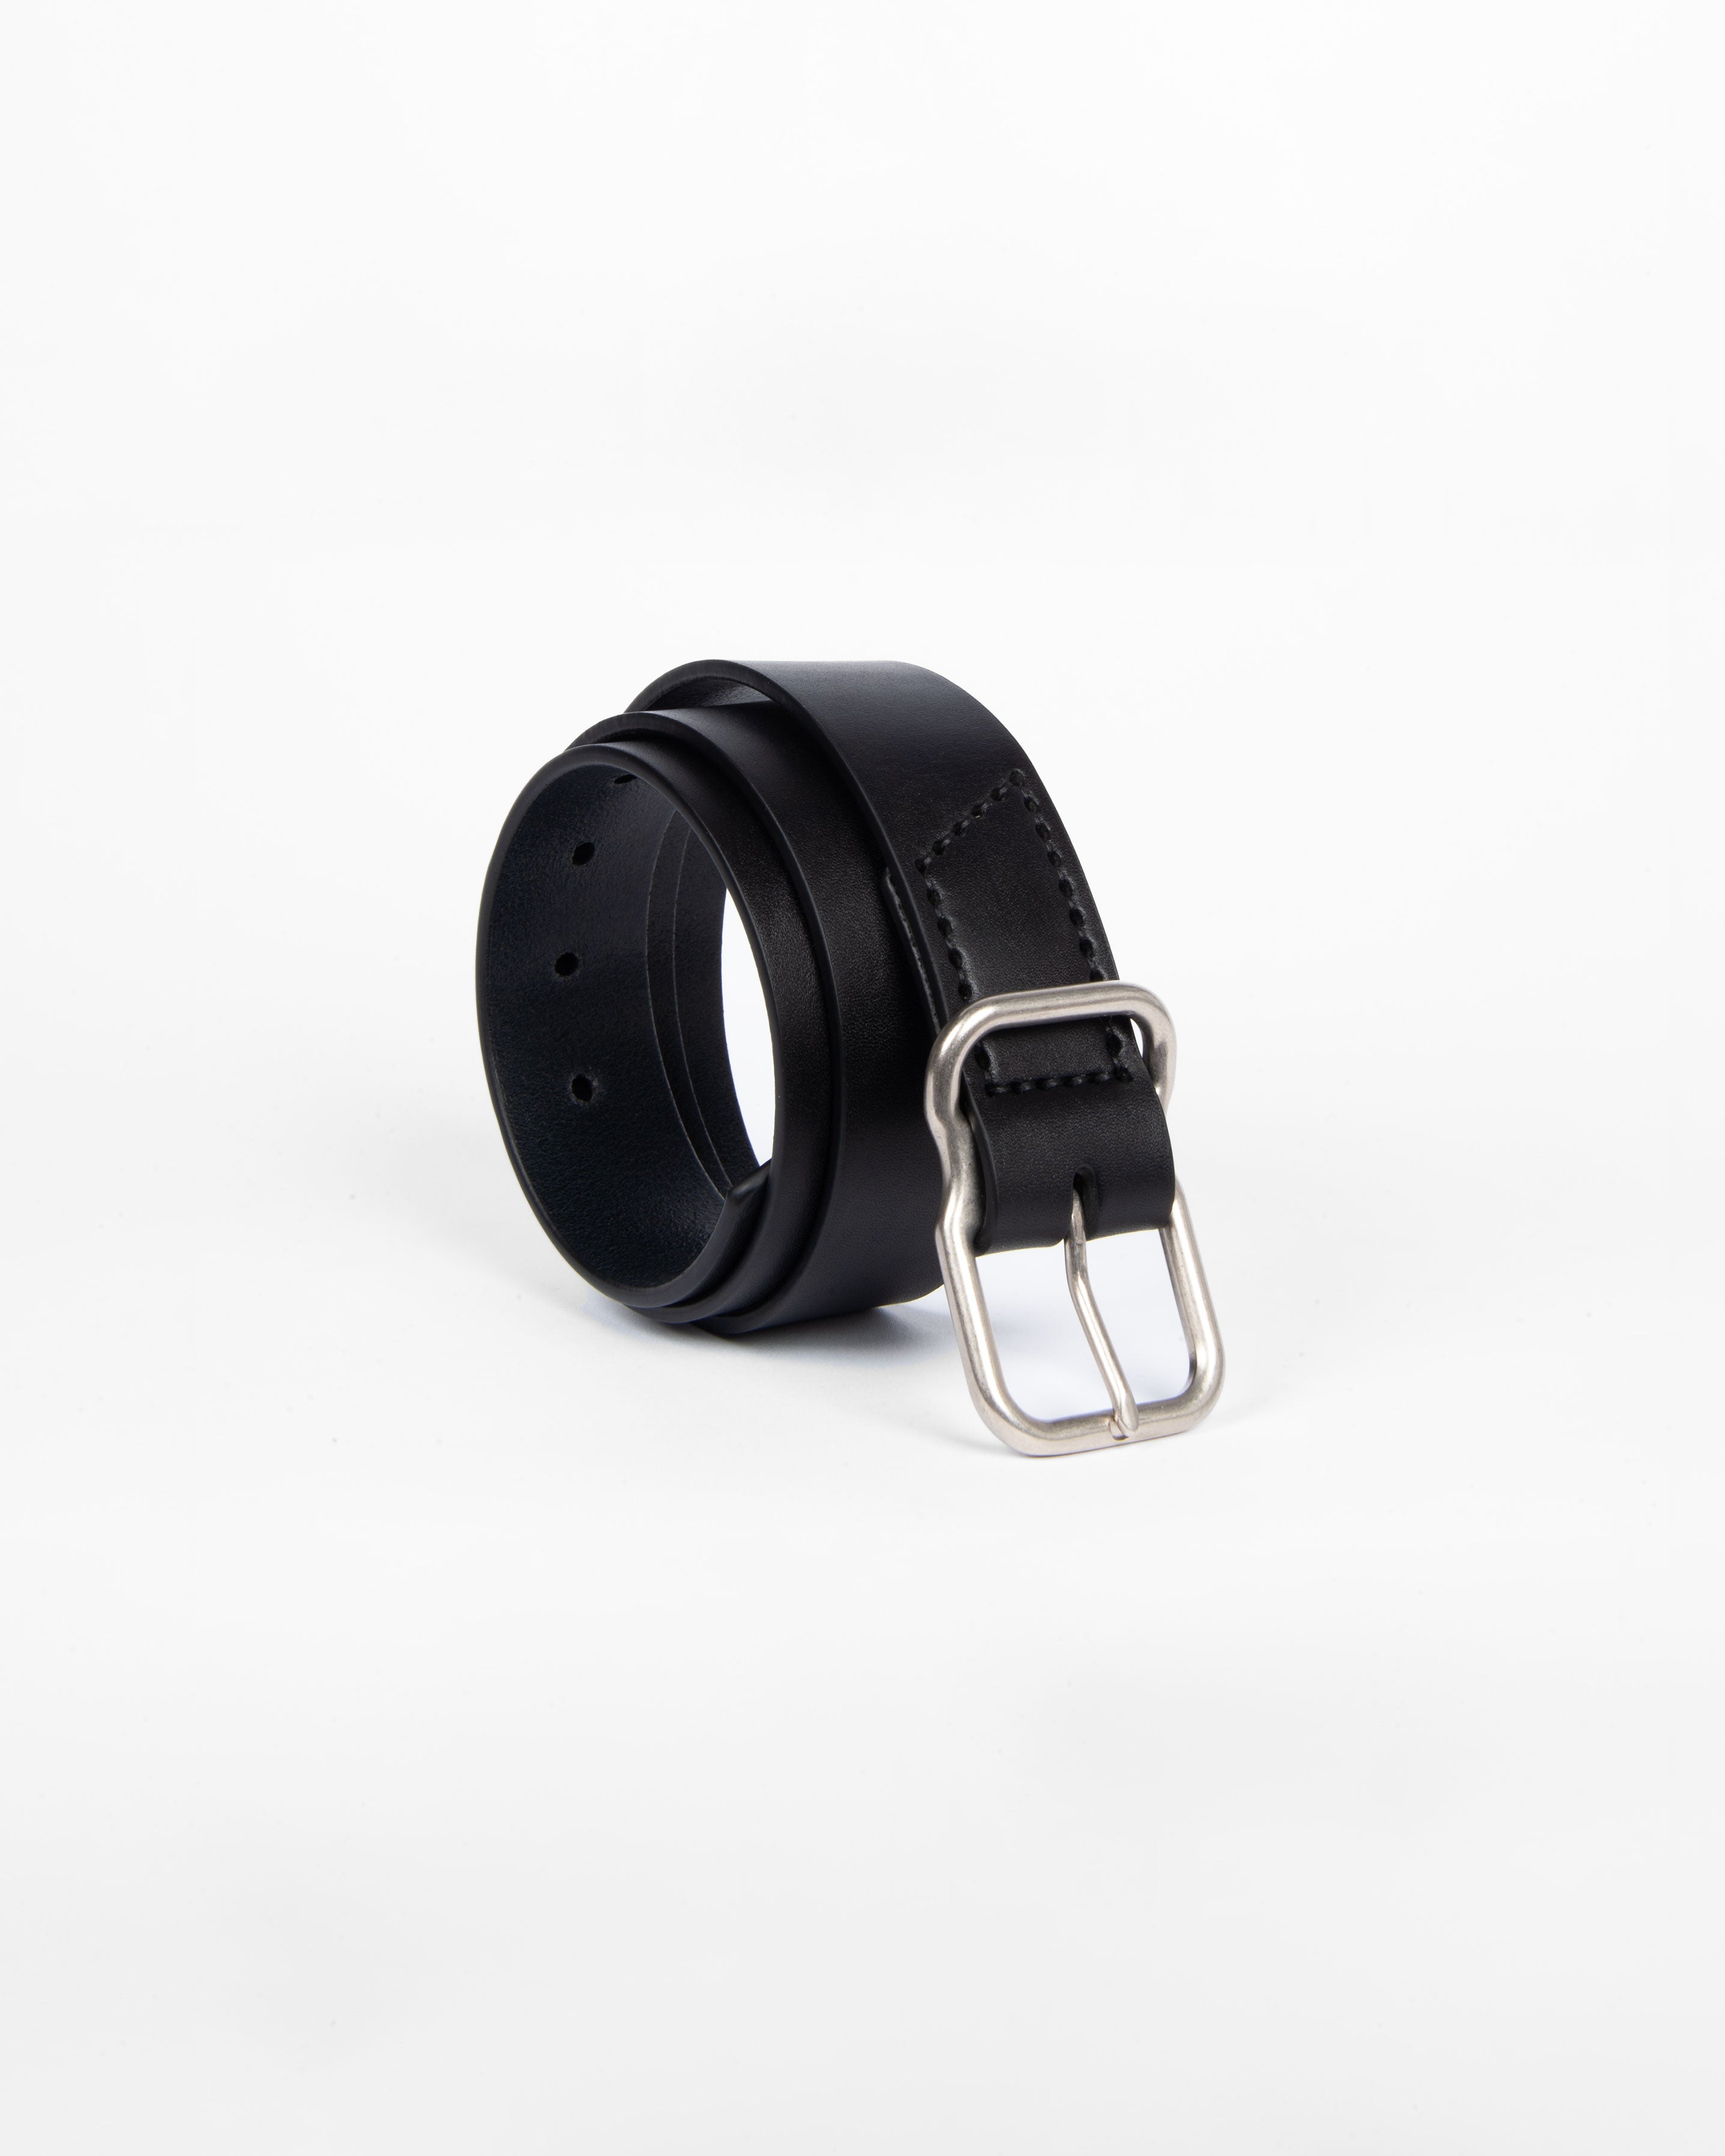 112 Signature Leather Belt - Black - Nickel